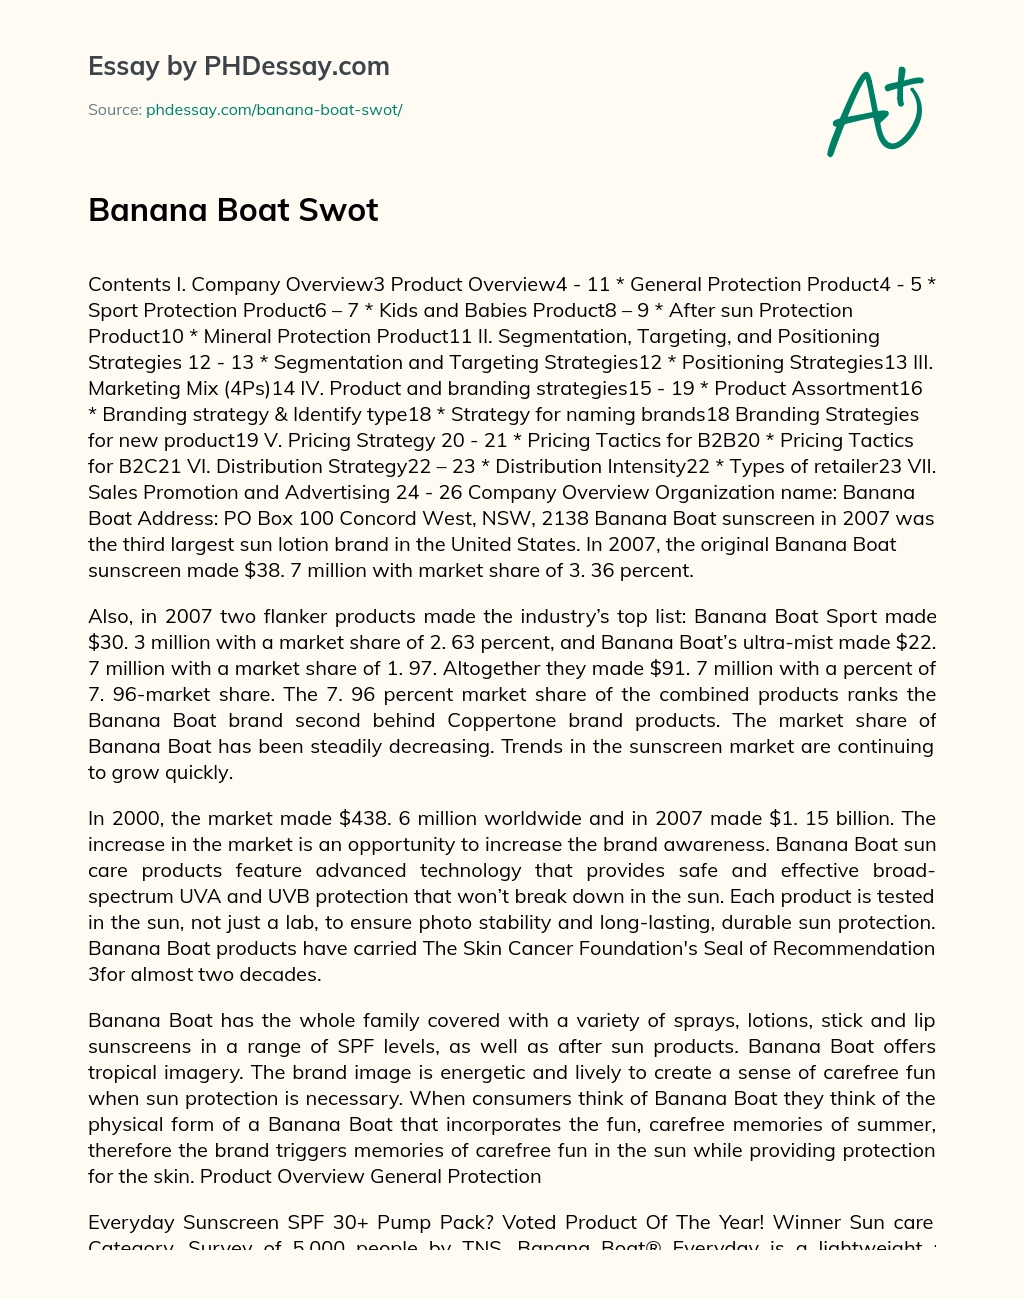 Banana Boat SWOT essay